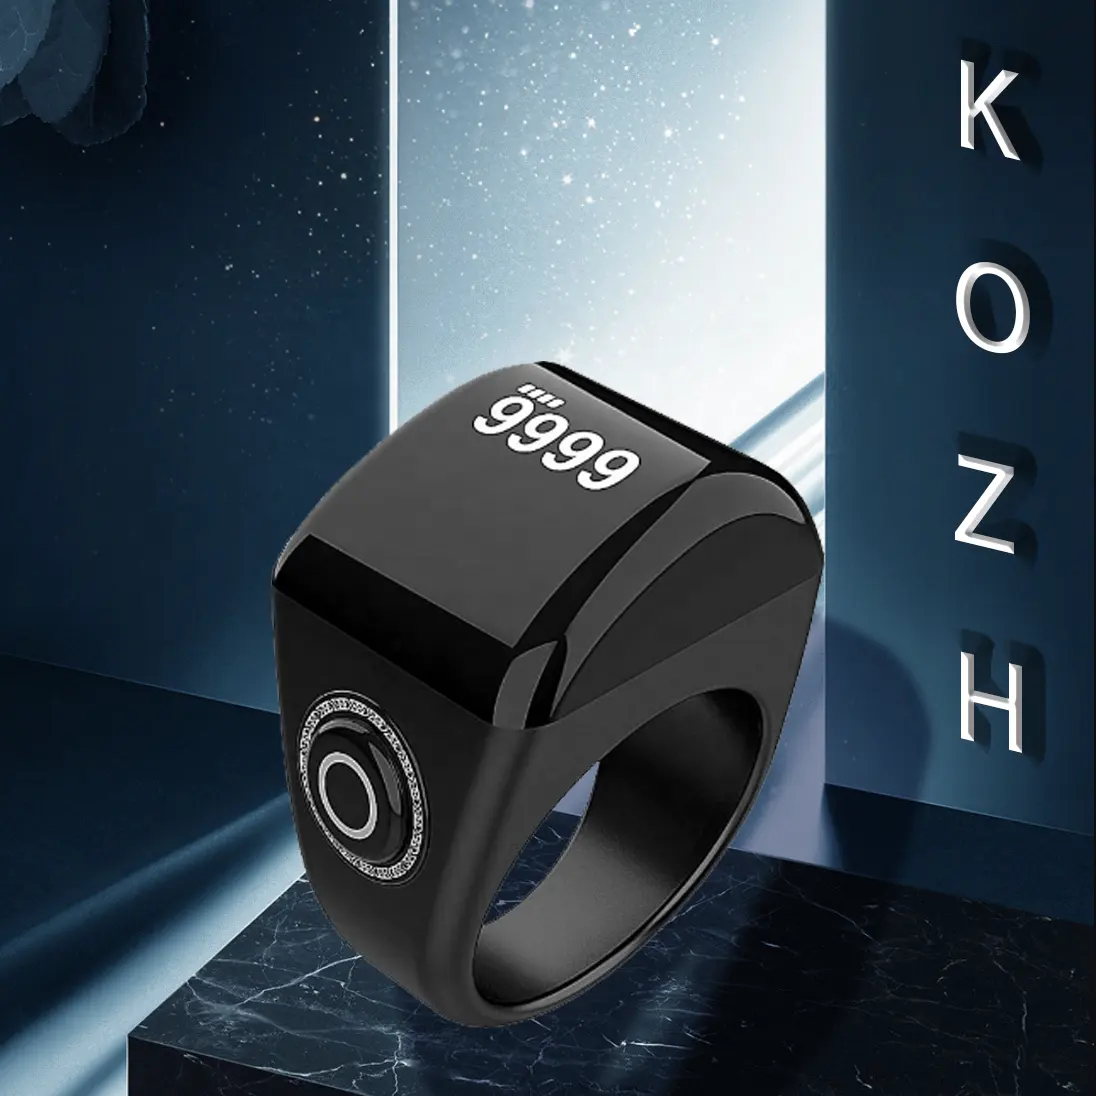 Kozh QB702lite แหวนอิสลามอัจฉริยะแบบชาร์จไฟได้ใหม่พร้อมตัวนับและสัญญาณเตือนดิจิตอล tasbeeh